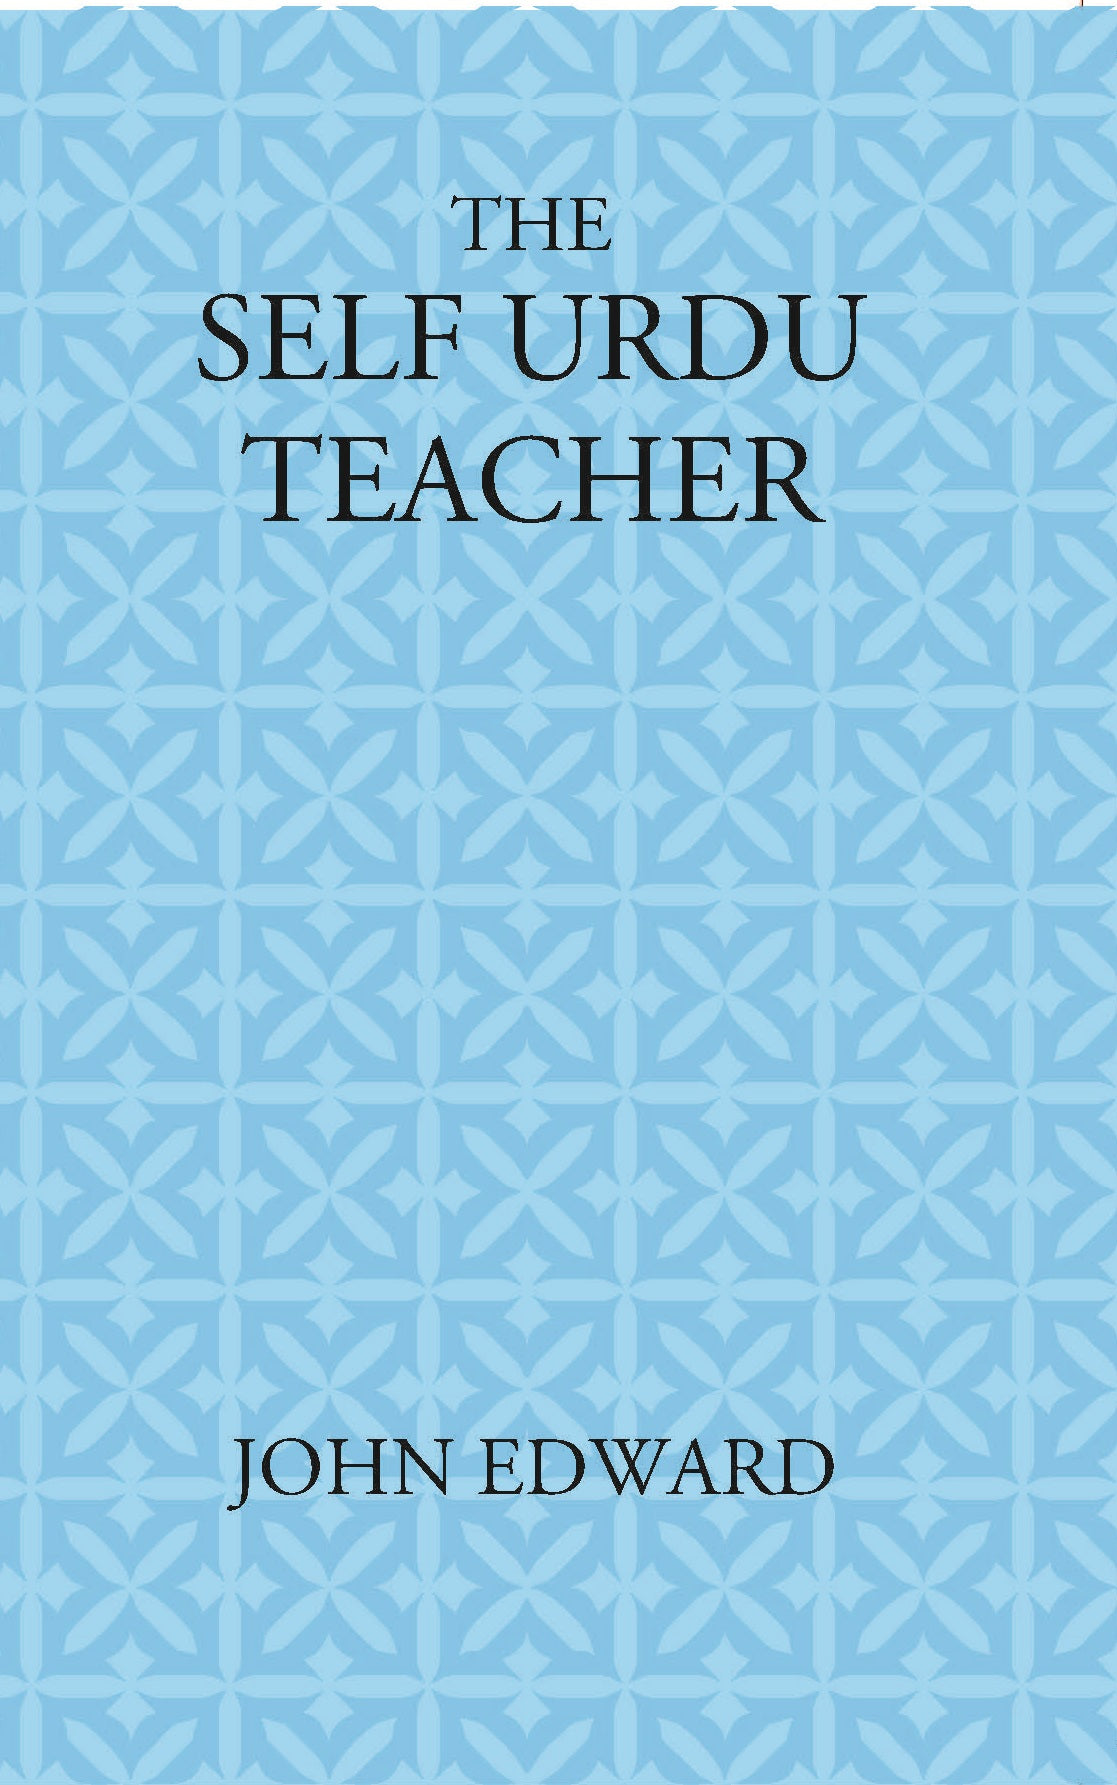 The Self Urdu Teacher